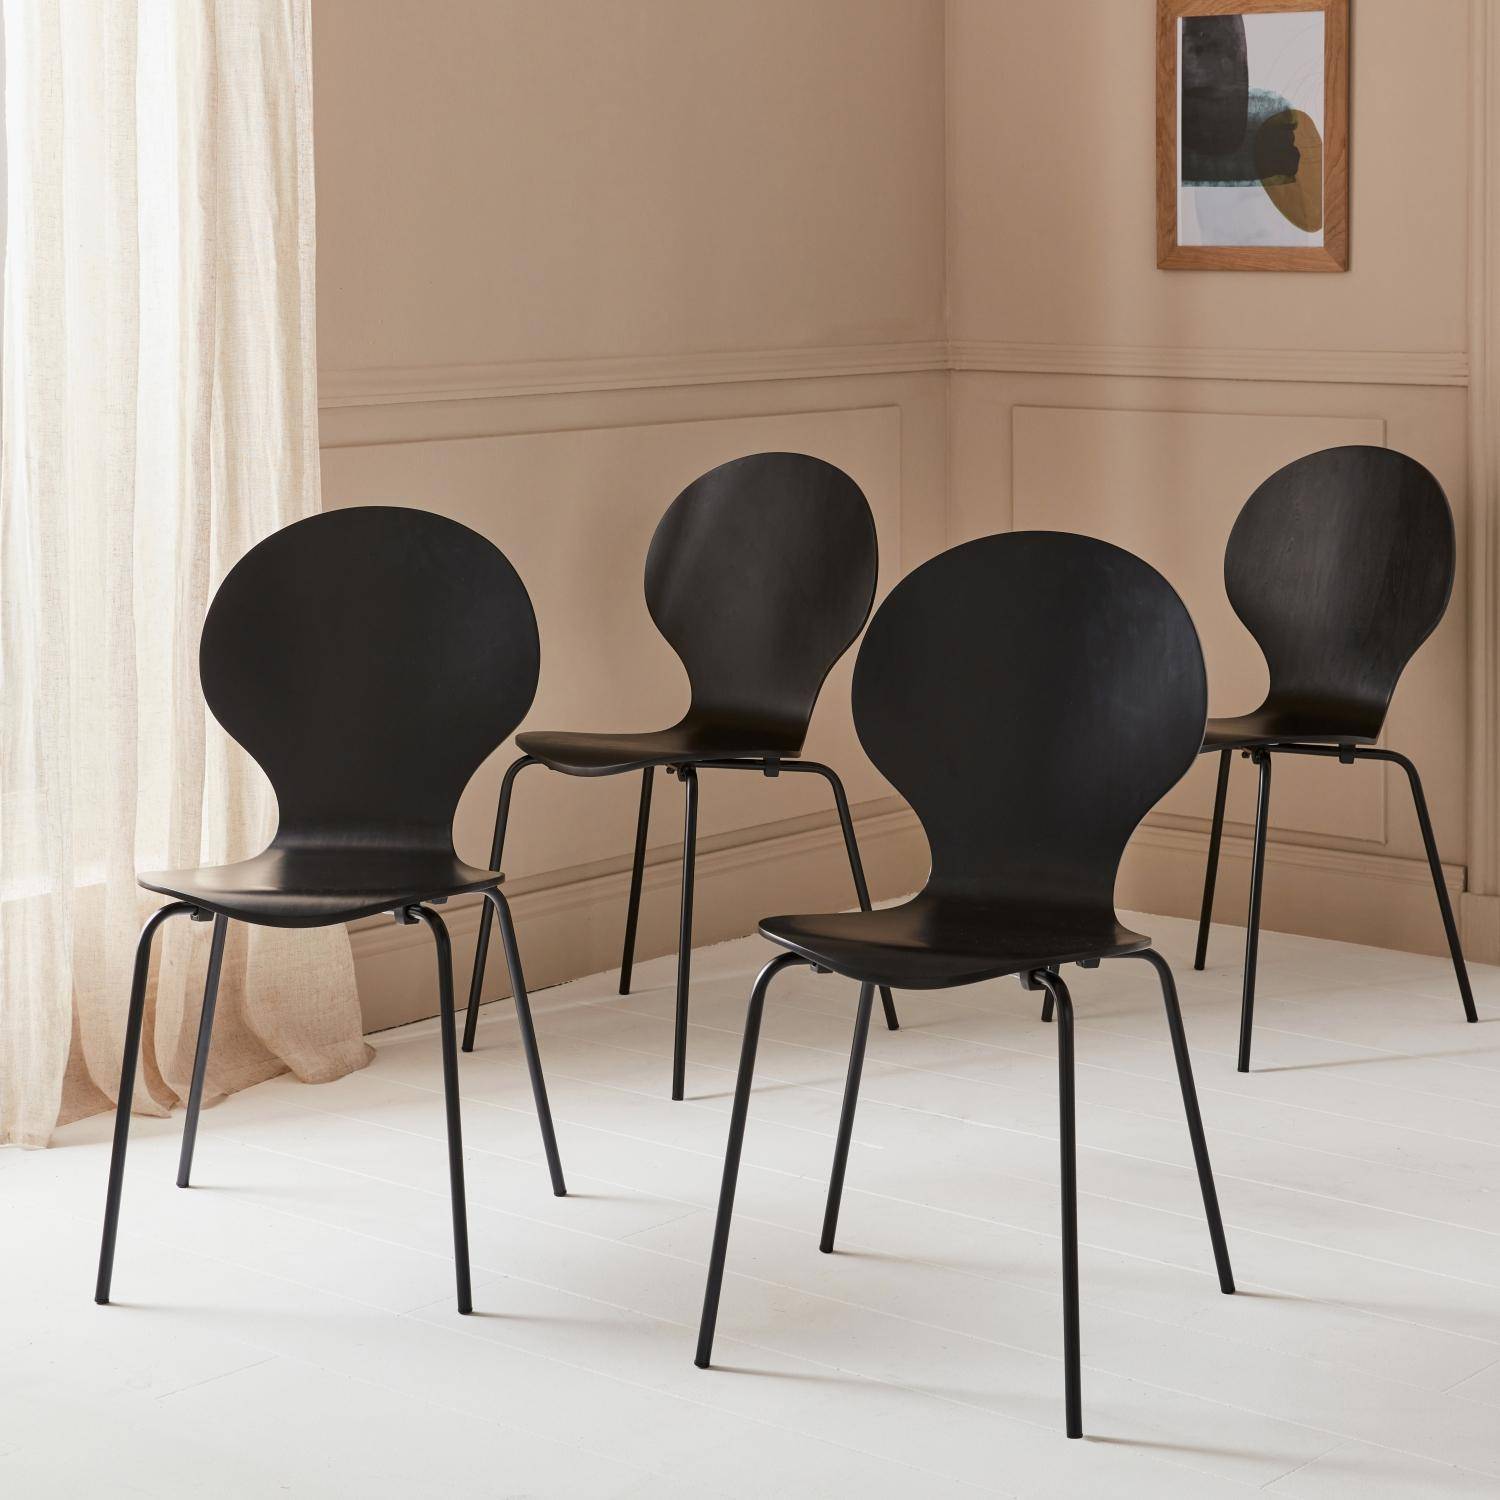 Set van 4 zwarte retro stapelstoelen, hevea hout en multiplex, stalen poten, Naomi, B 43 x D 48 x H 87cm,sweeek,Photo2